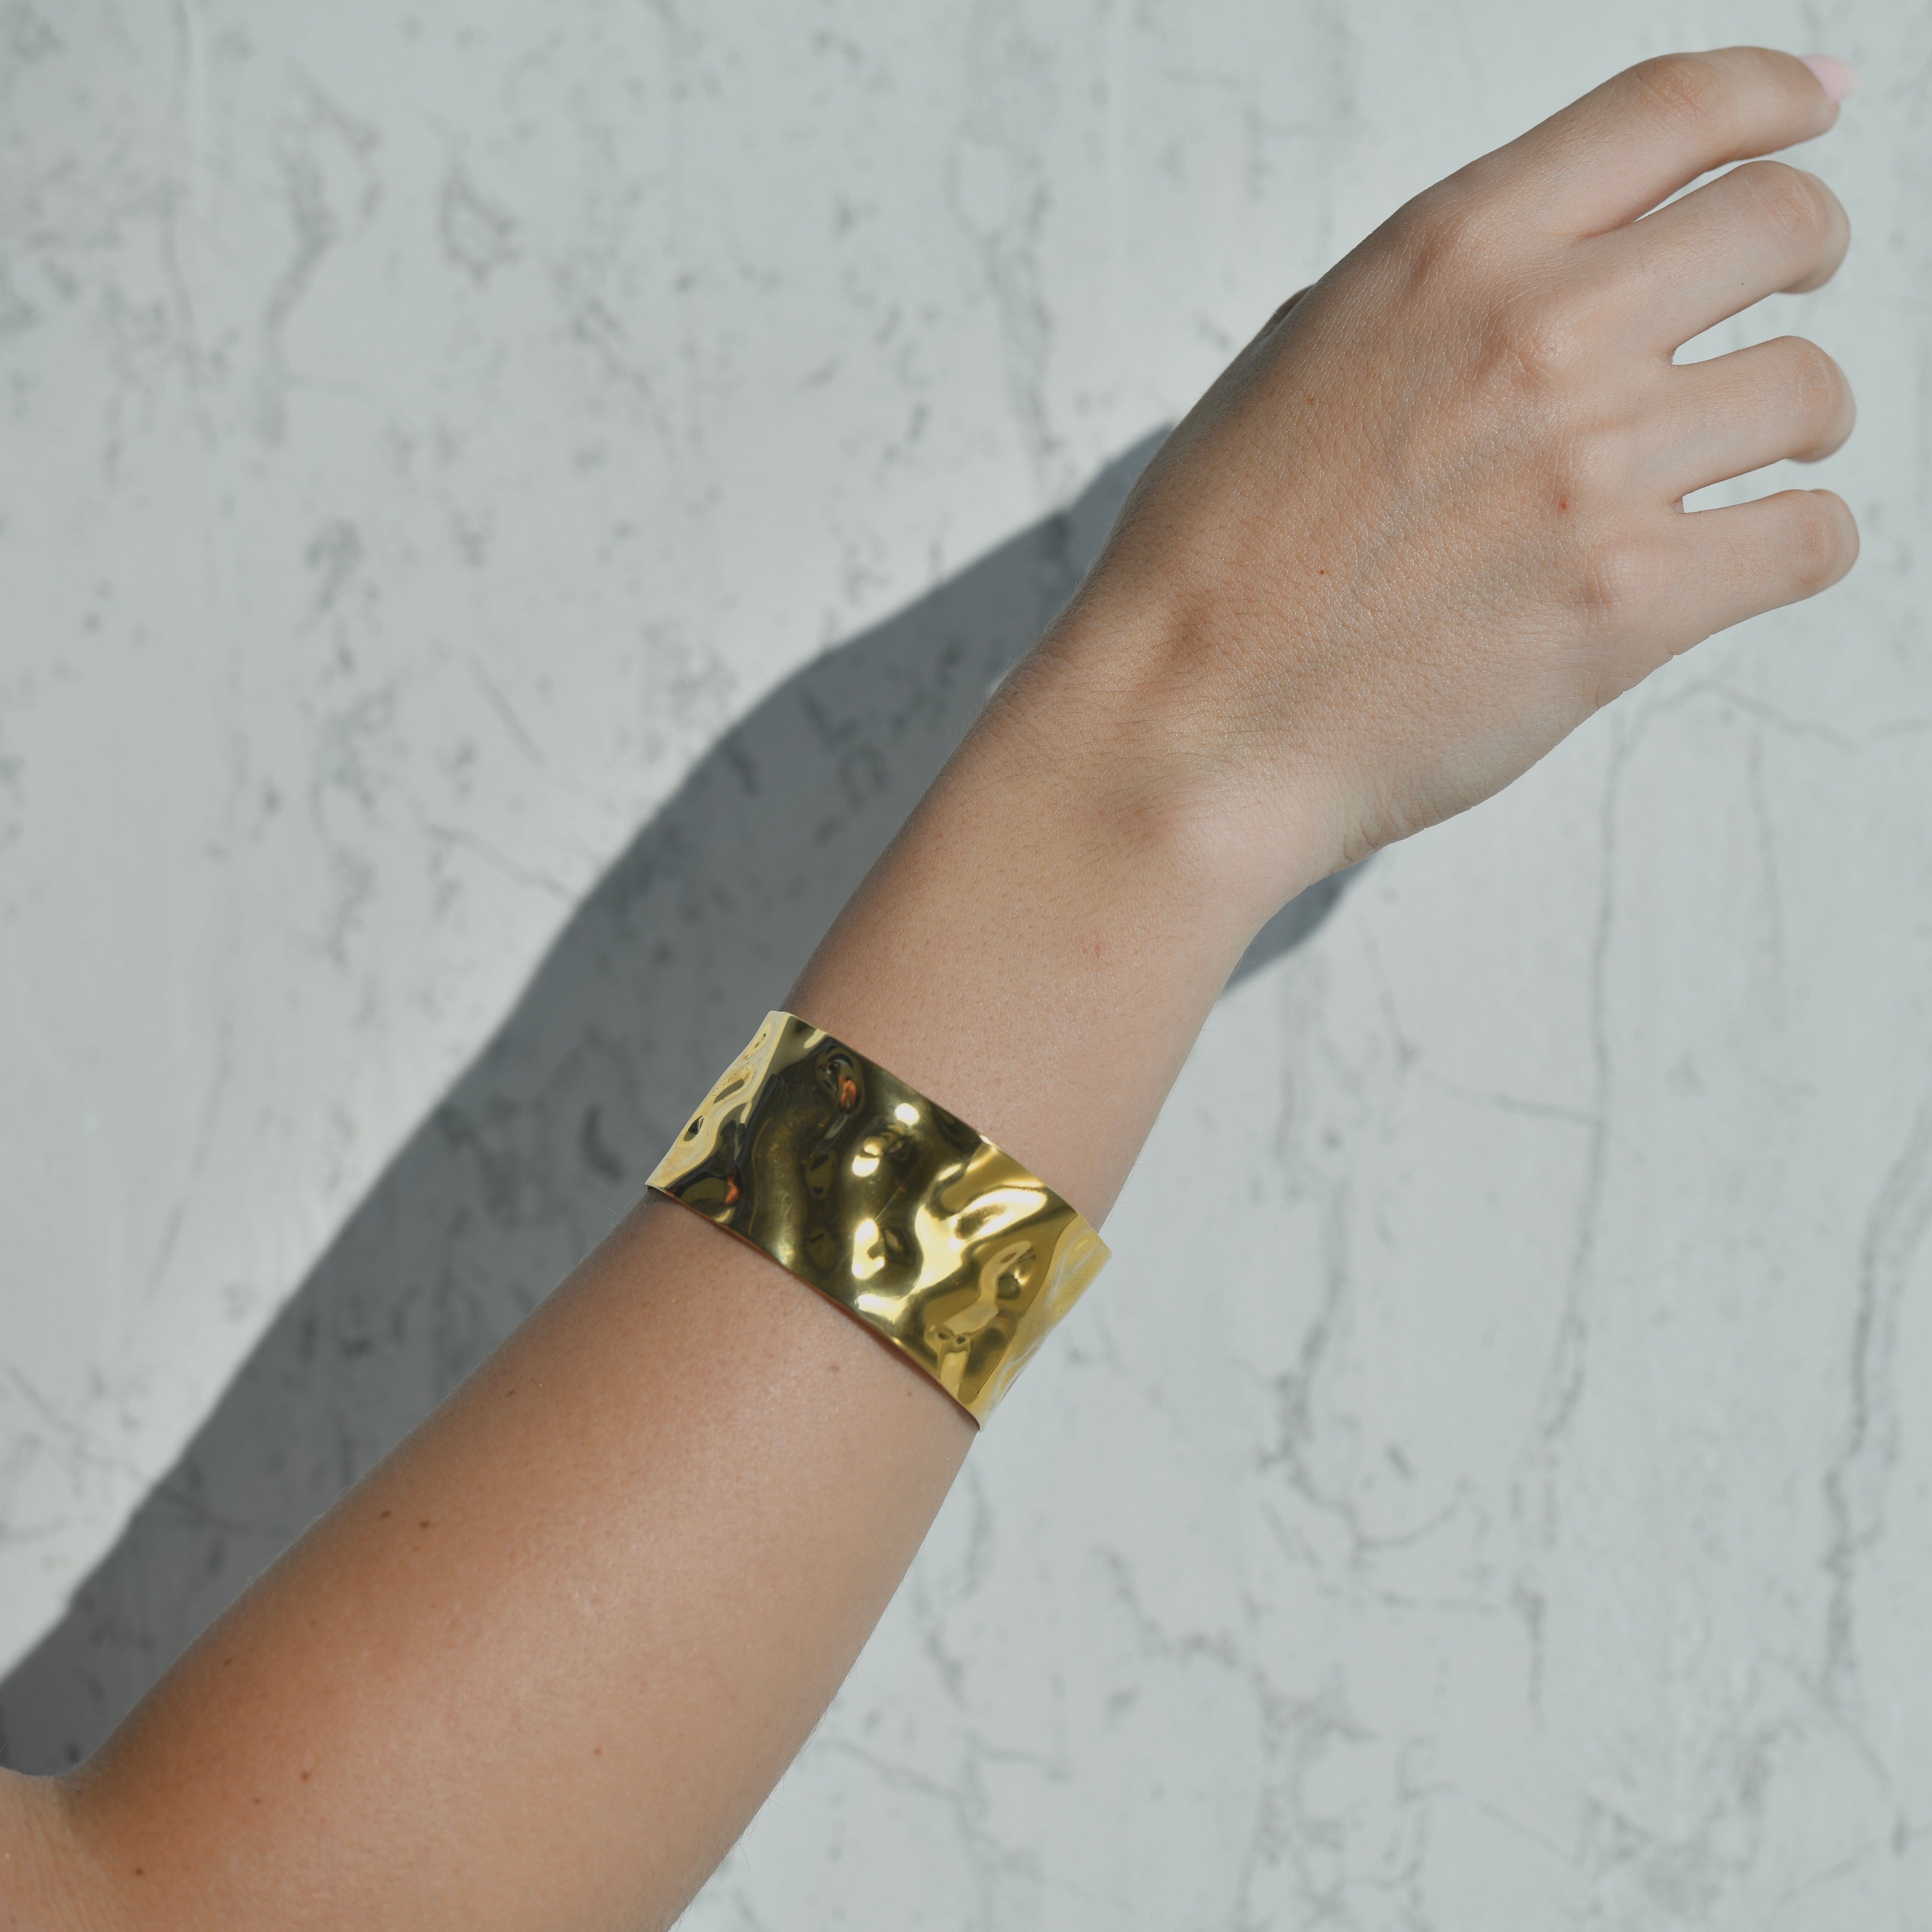 Wave gold cuff bracelet. Gold hammered irregular shiny surface of the gold cuff bracelet. Adjustable opening.